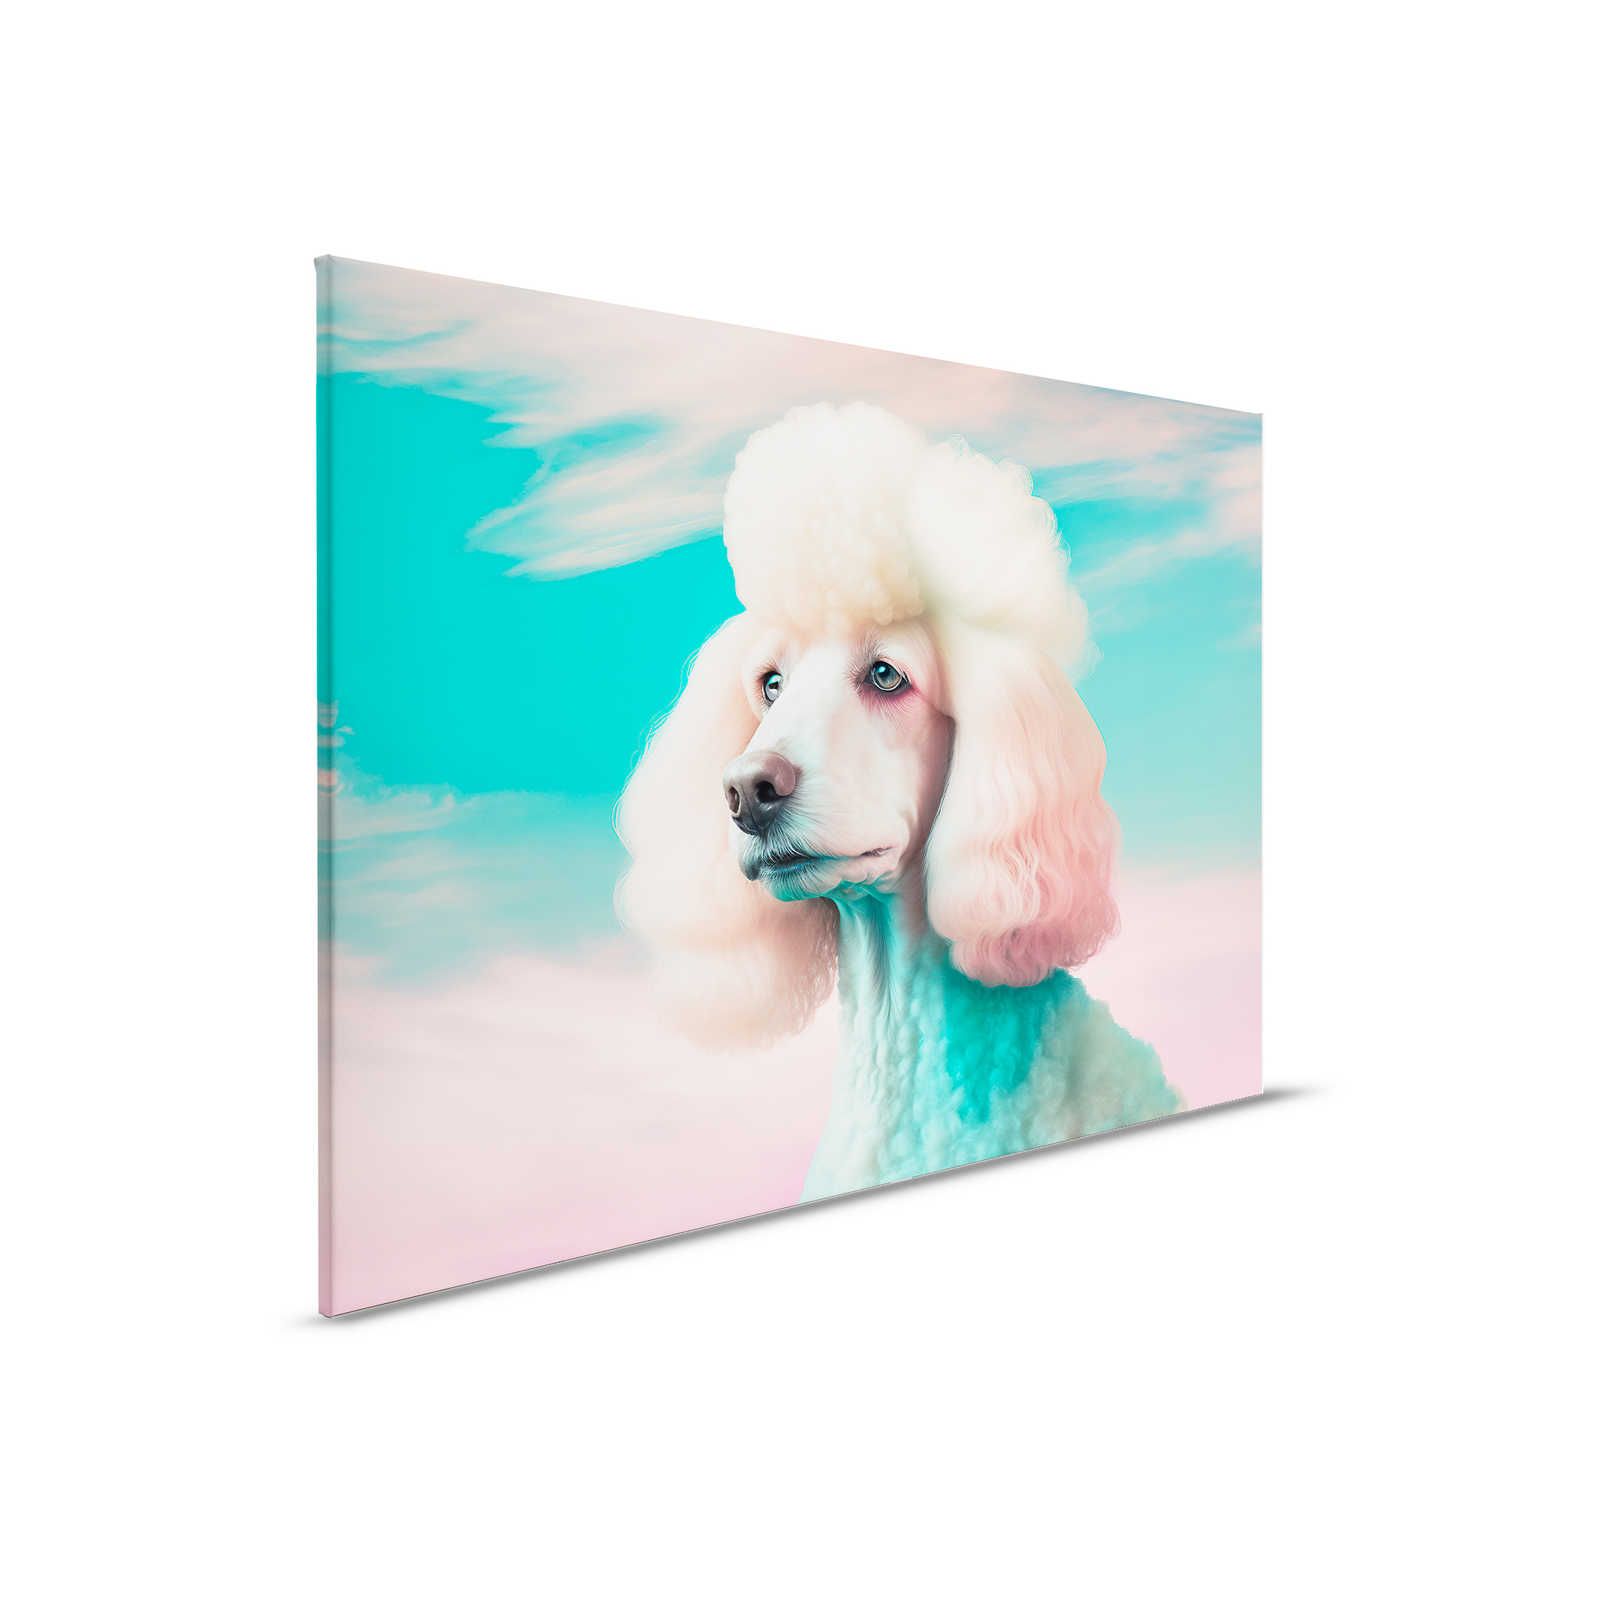         KI Canvas painting »rainbow dog« - 90 cm x 60 cm
    